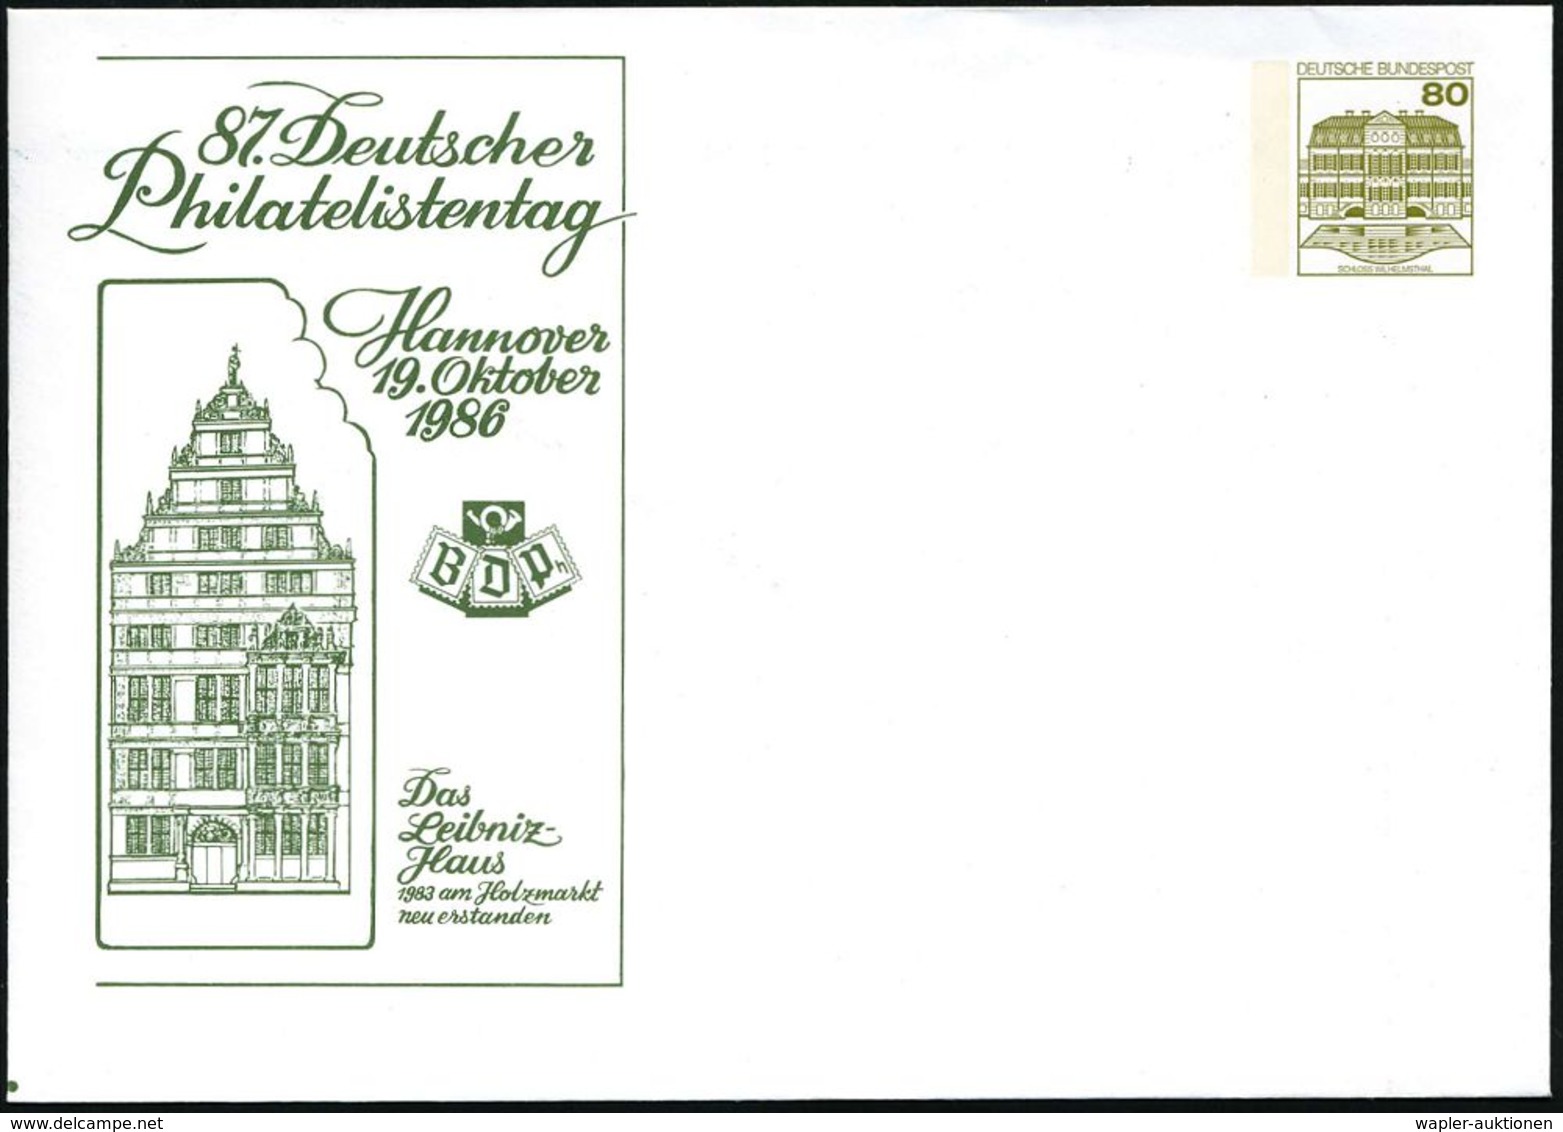 BERÜHMTE MATHEMATIKER : Hannover 1986 (19.10.) PU 80 Pf. Burgen; 87. Deutscher Philatel.Tag/ Das  L E I B N I T Z - Haus - Non Classificati